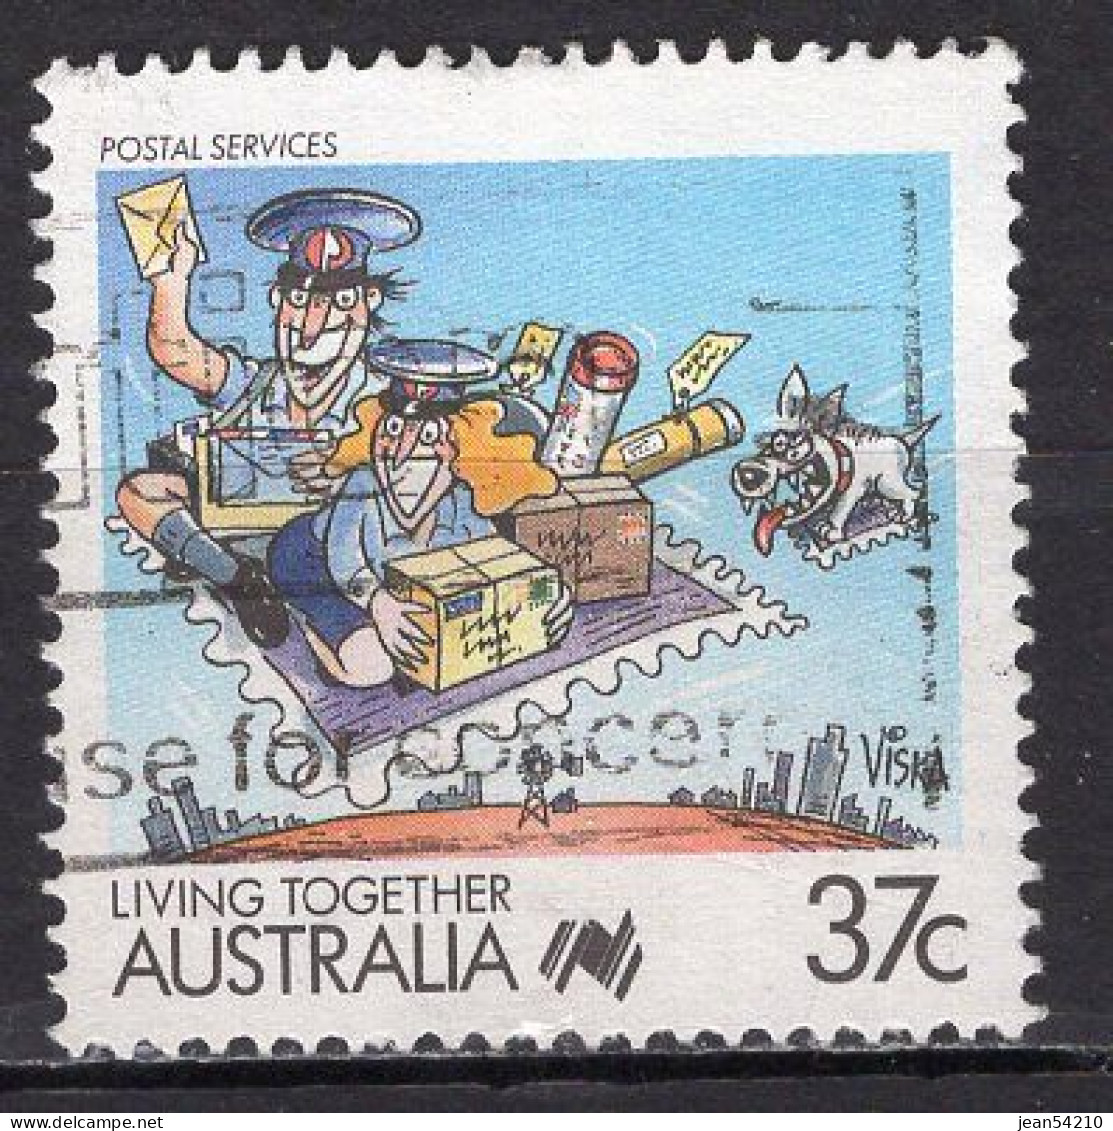 AUSTRALIE - Timbre N°1056 Oblitéré - Used Stamps